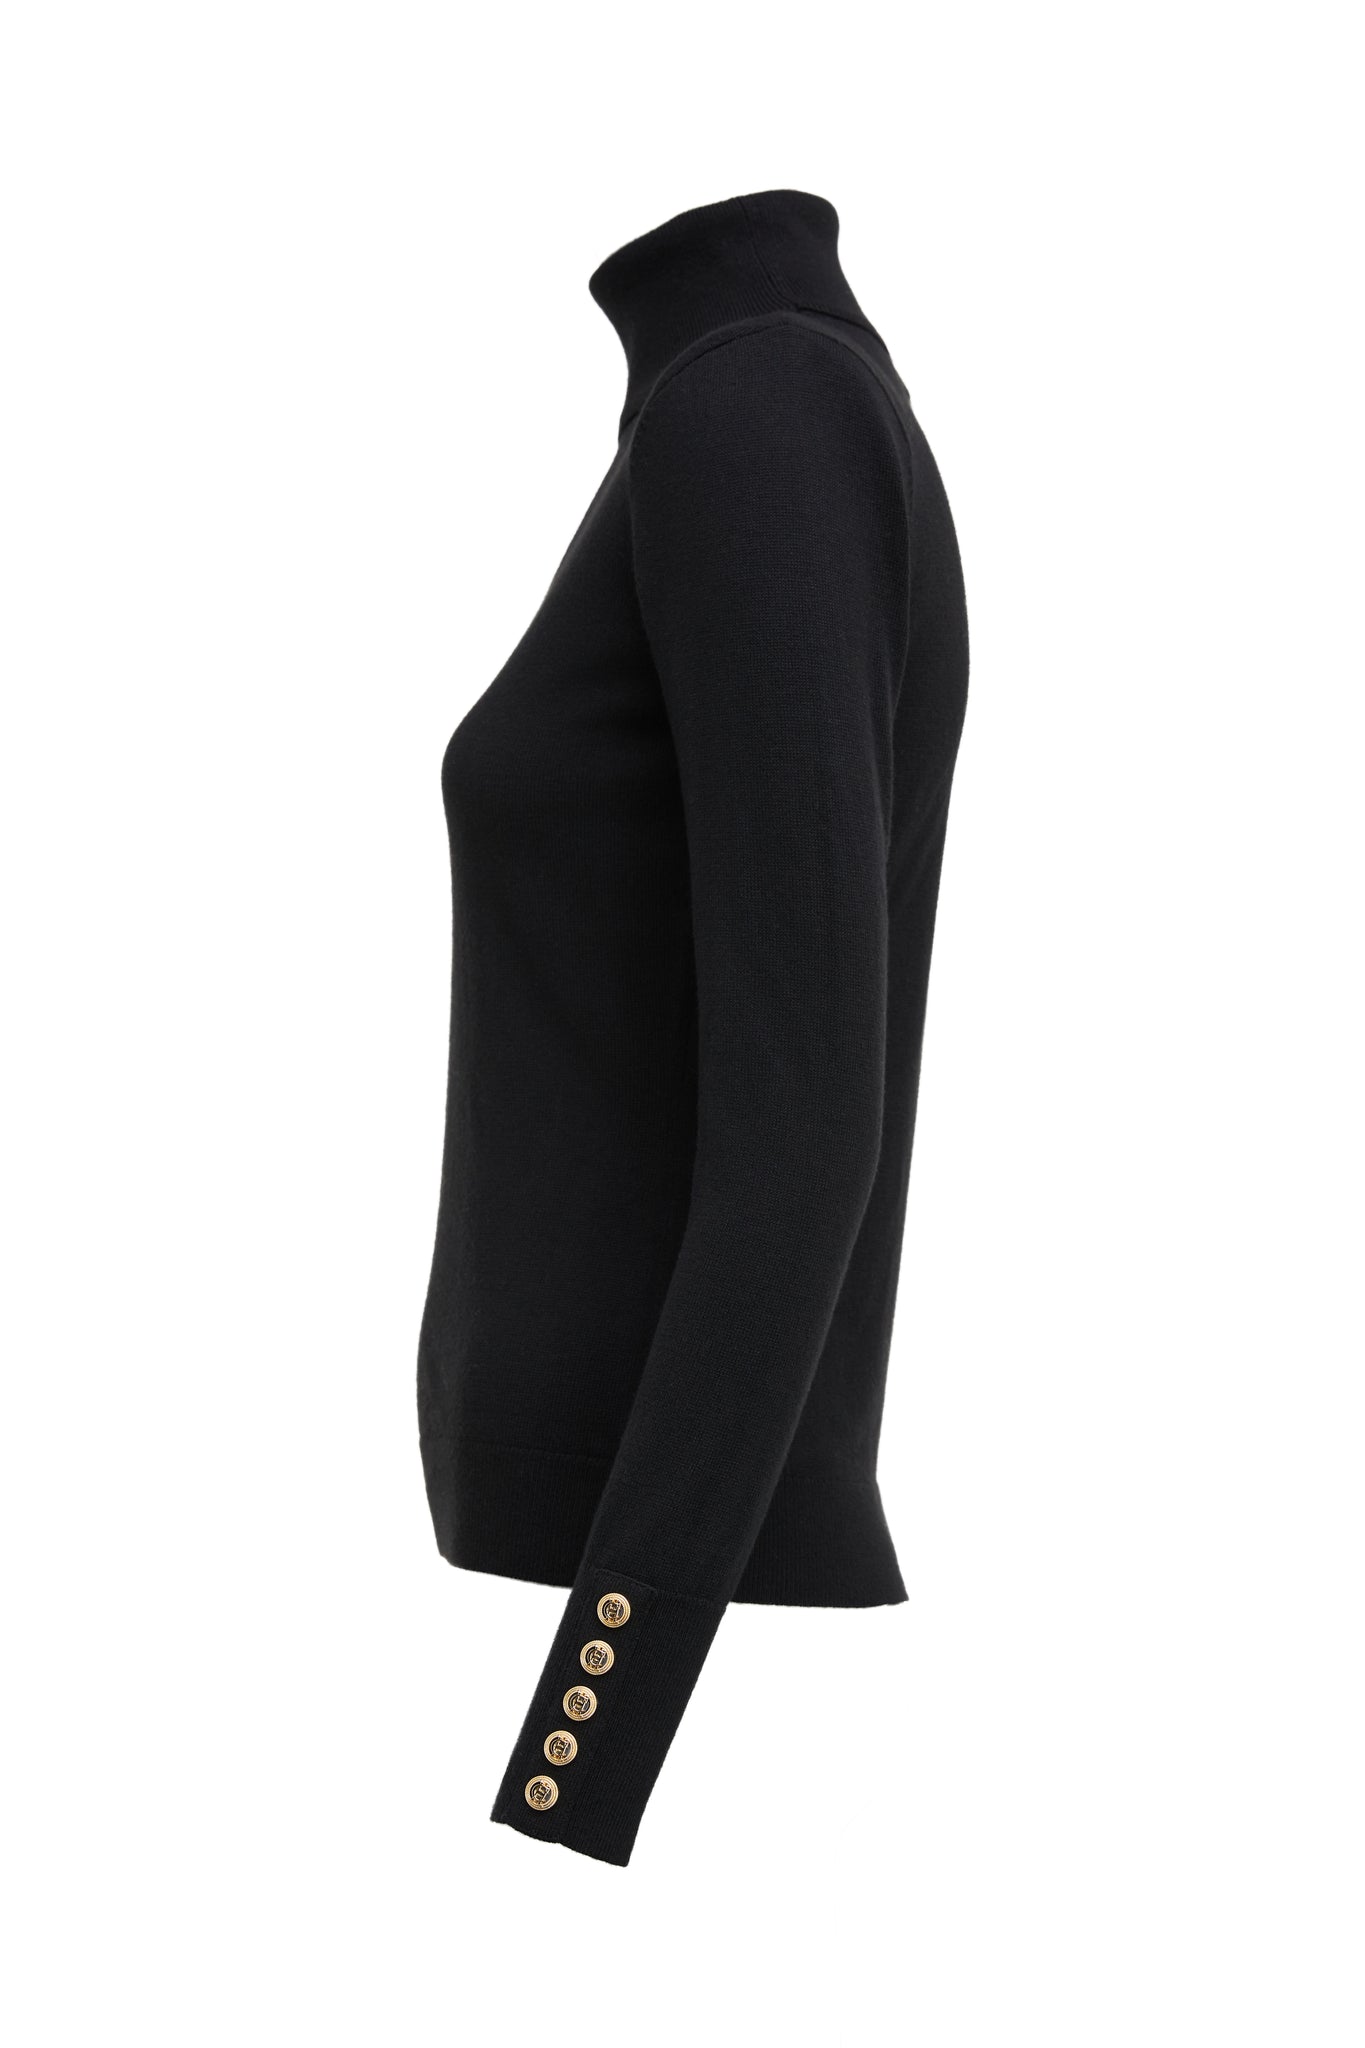 side of cashmere blend lightweight Roll neck knit in black with shoulder pads 